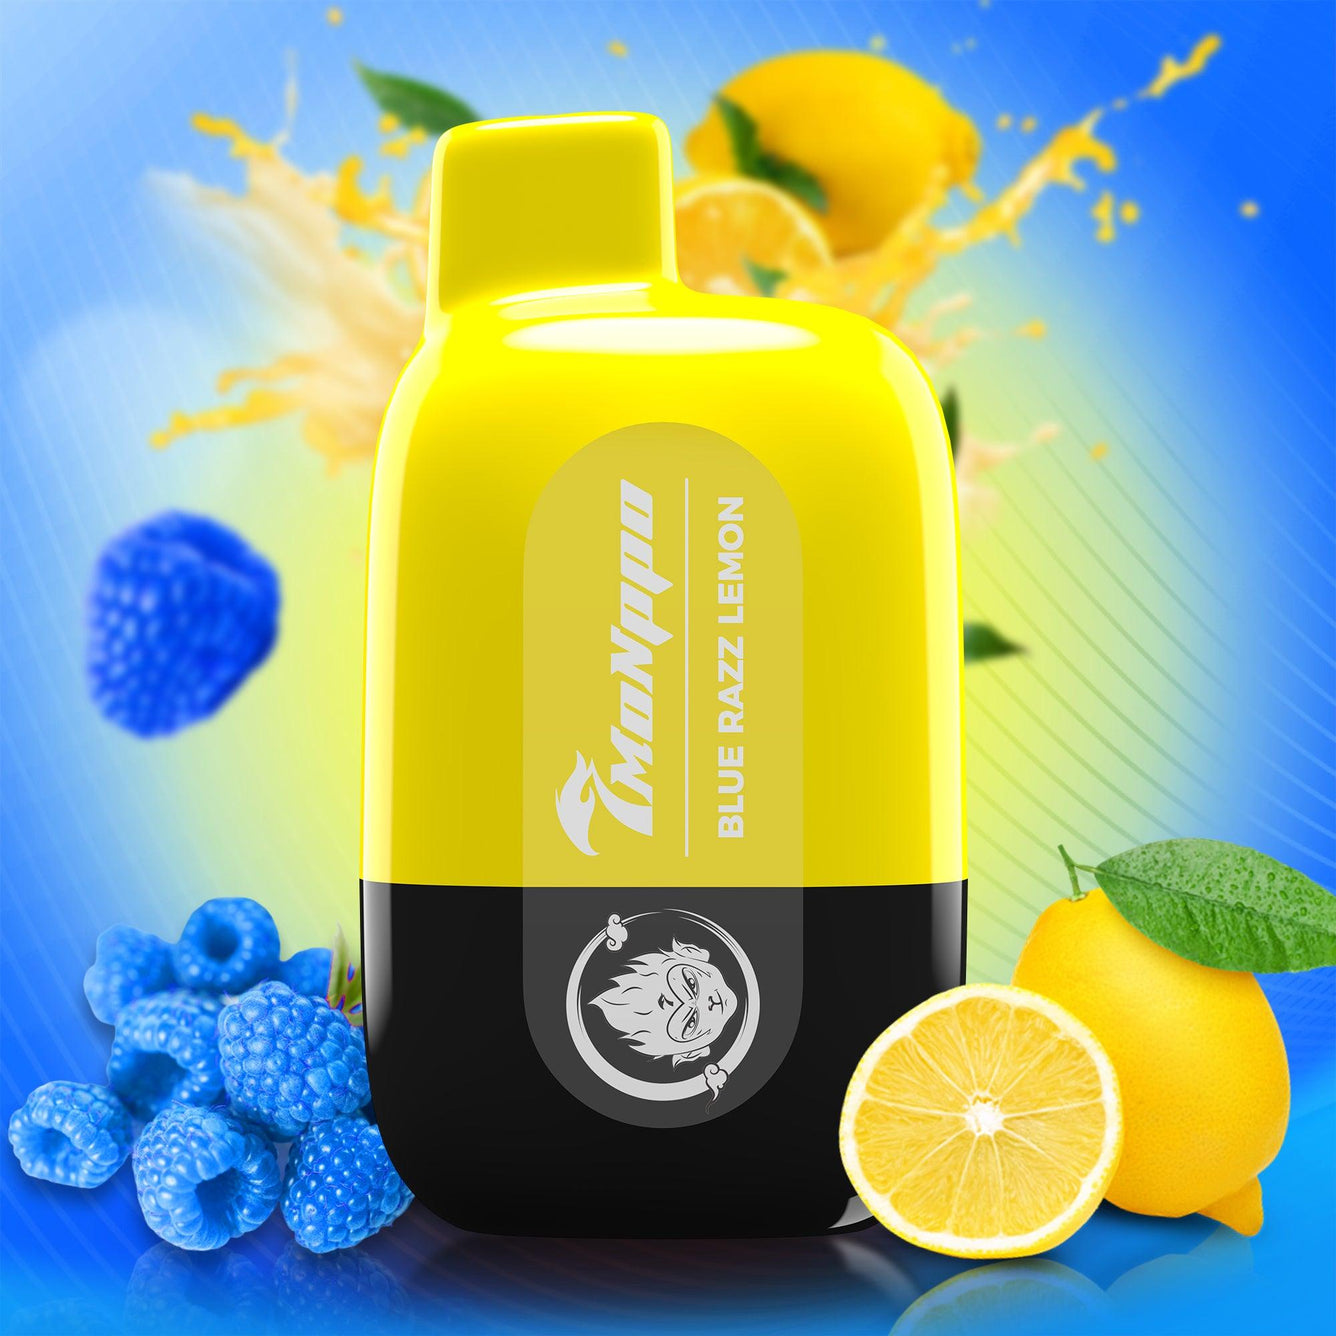 7VAPE disposable vape,  blue raspberry lemon vape, blue raspberry vape, lemon vape, blue razz vape, blue razz lemon vape,  5000 puffs, 5% nicotine, 7-VAPE BAR PLUS， 7MONPPO BAR, 7MONPPO DISPOSABLE VAPE, 7MONPPO BOX, 7MONPPO BOX PLUS, 5% nicotine, rechargeable disposable vape, rechargeable vape, mesh coil